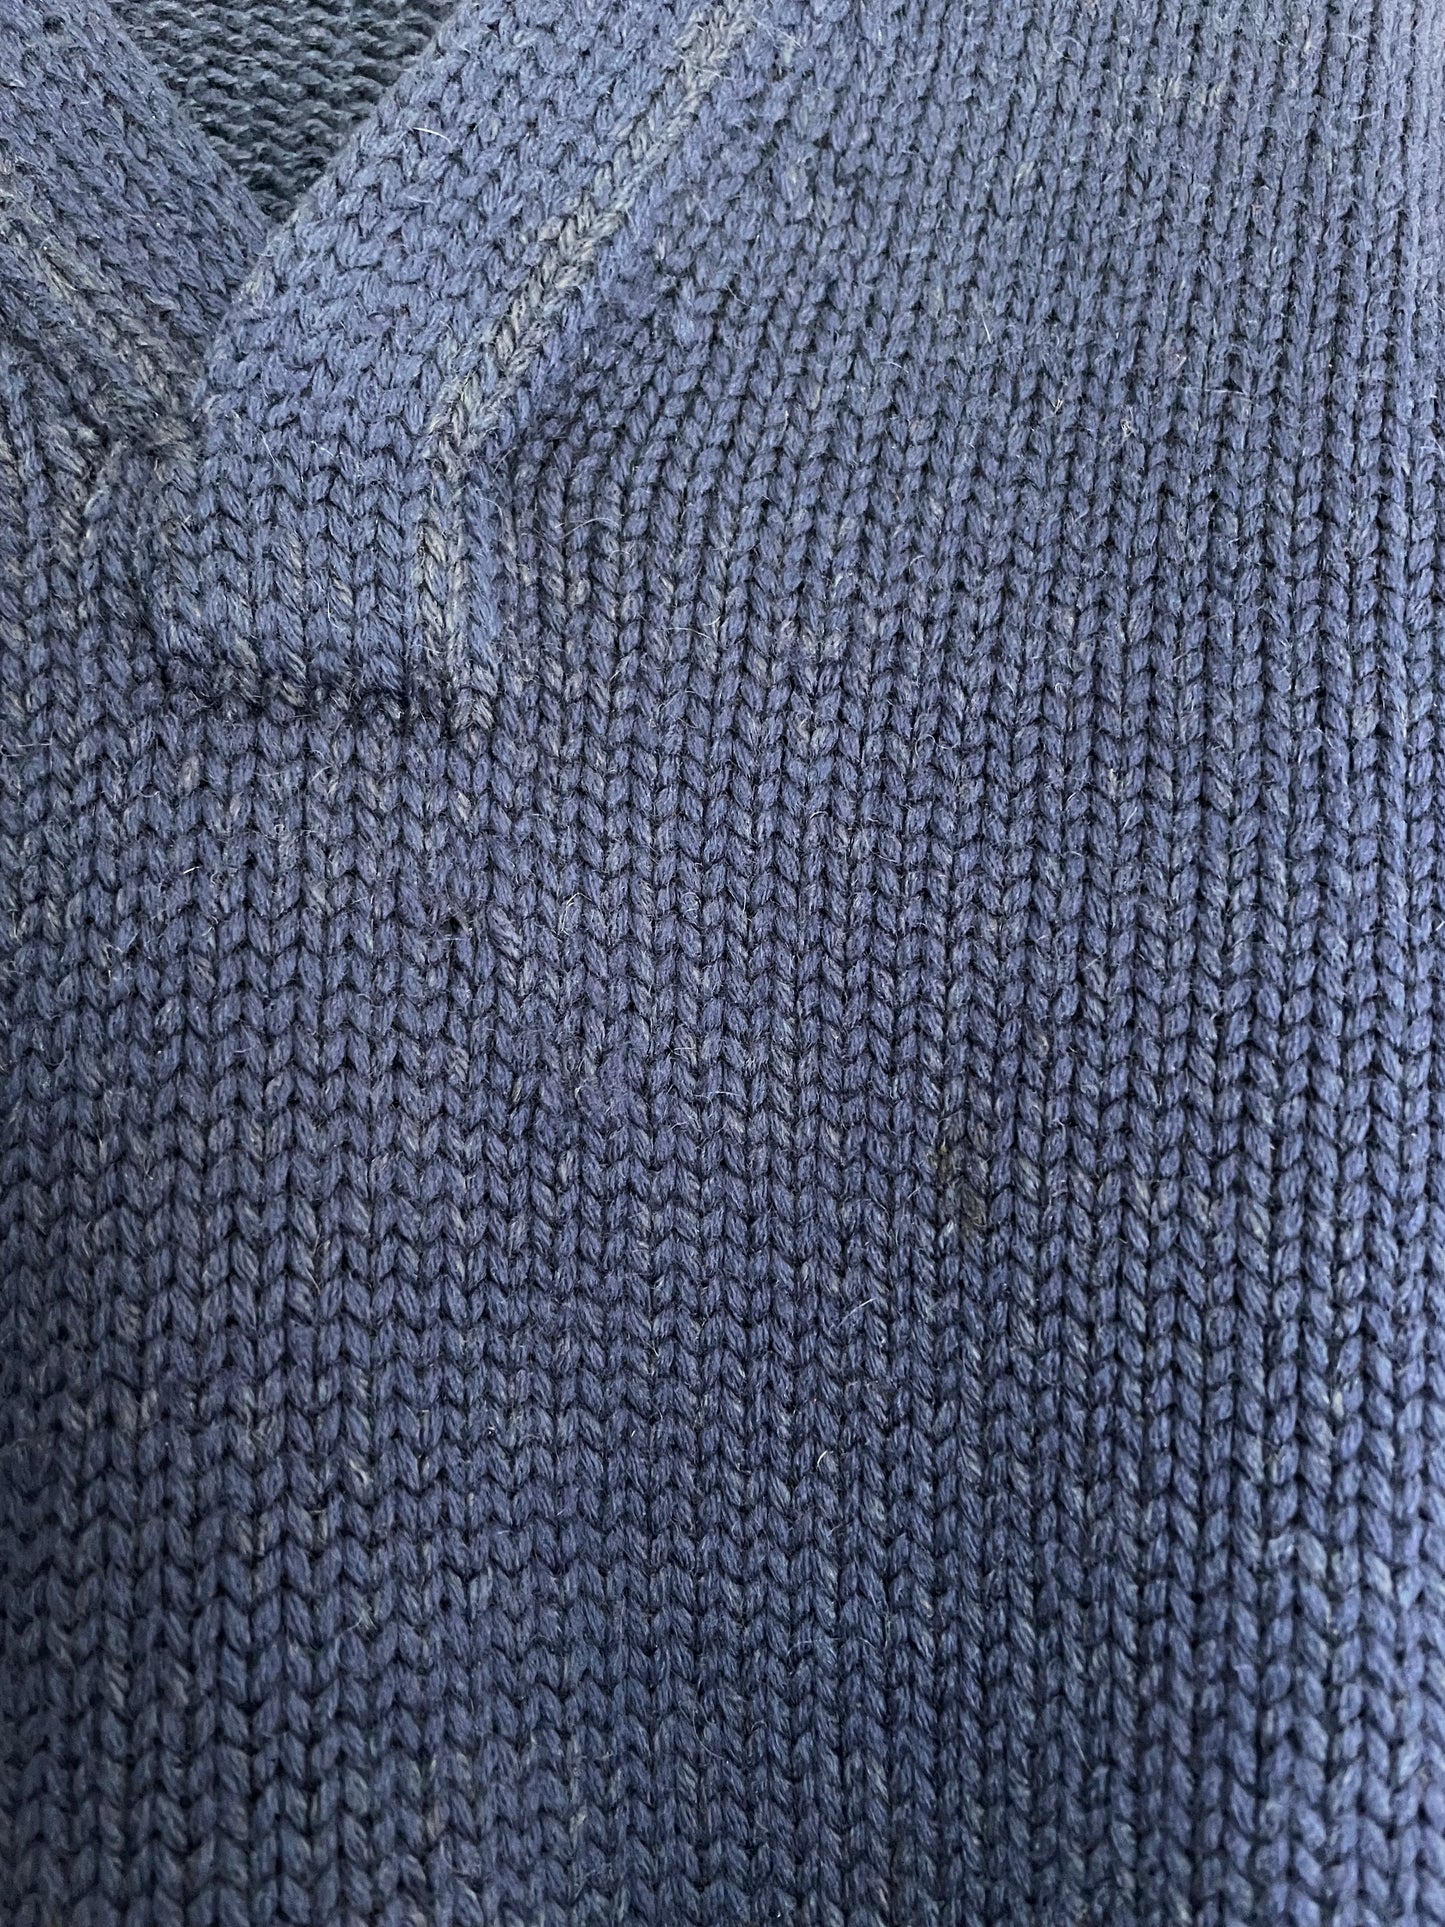 50s Blue Pullover Letterman Award Sweater